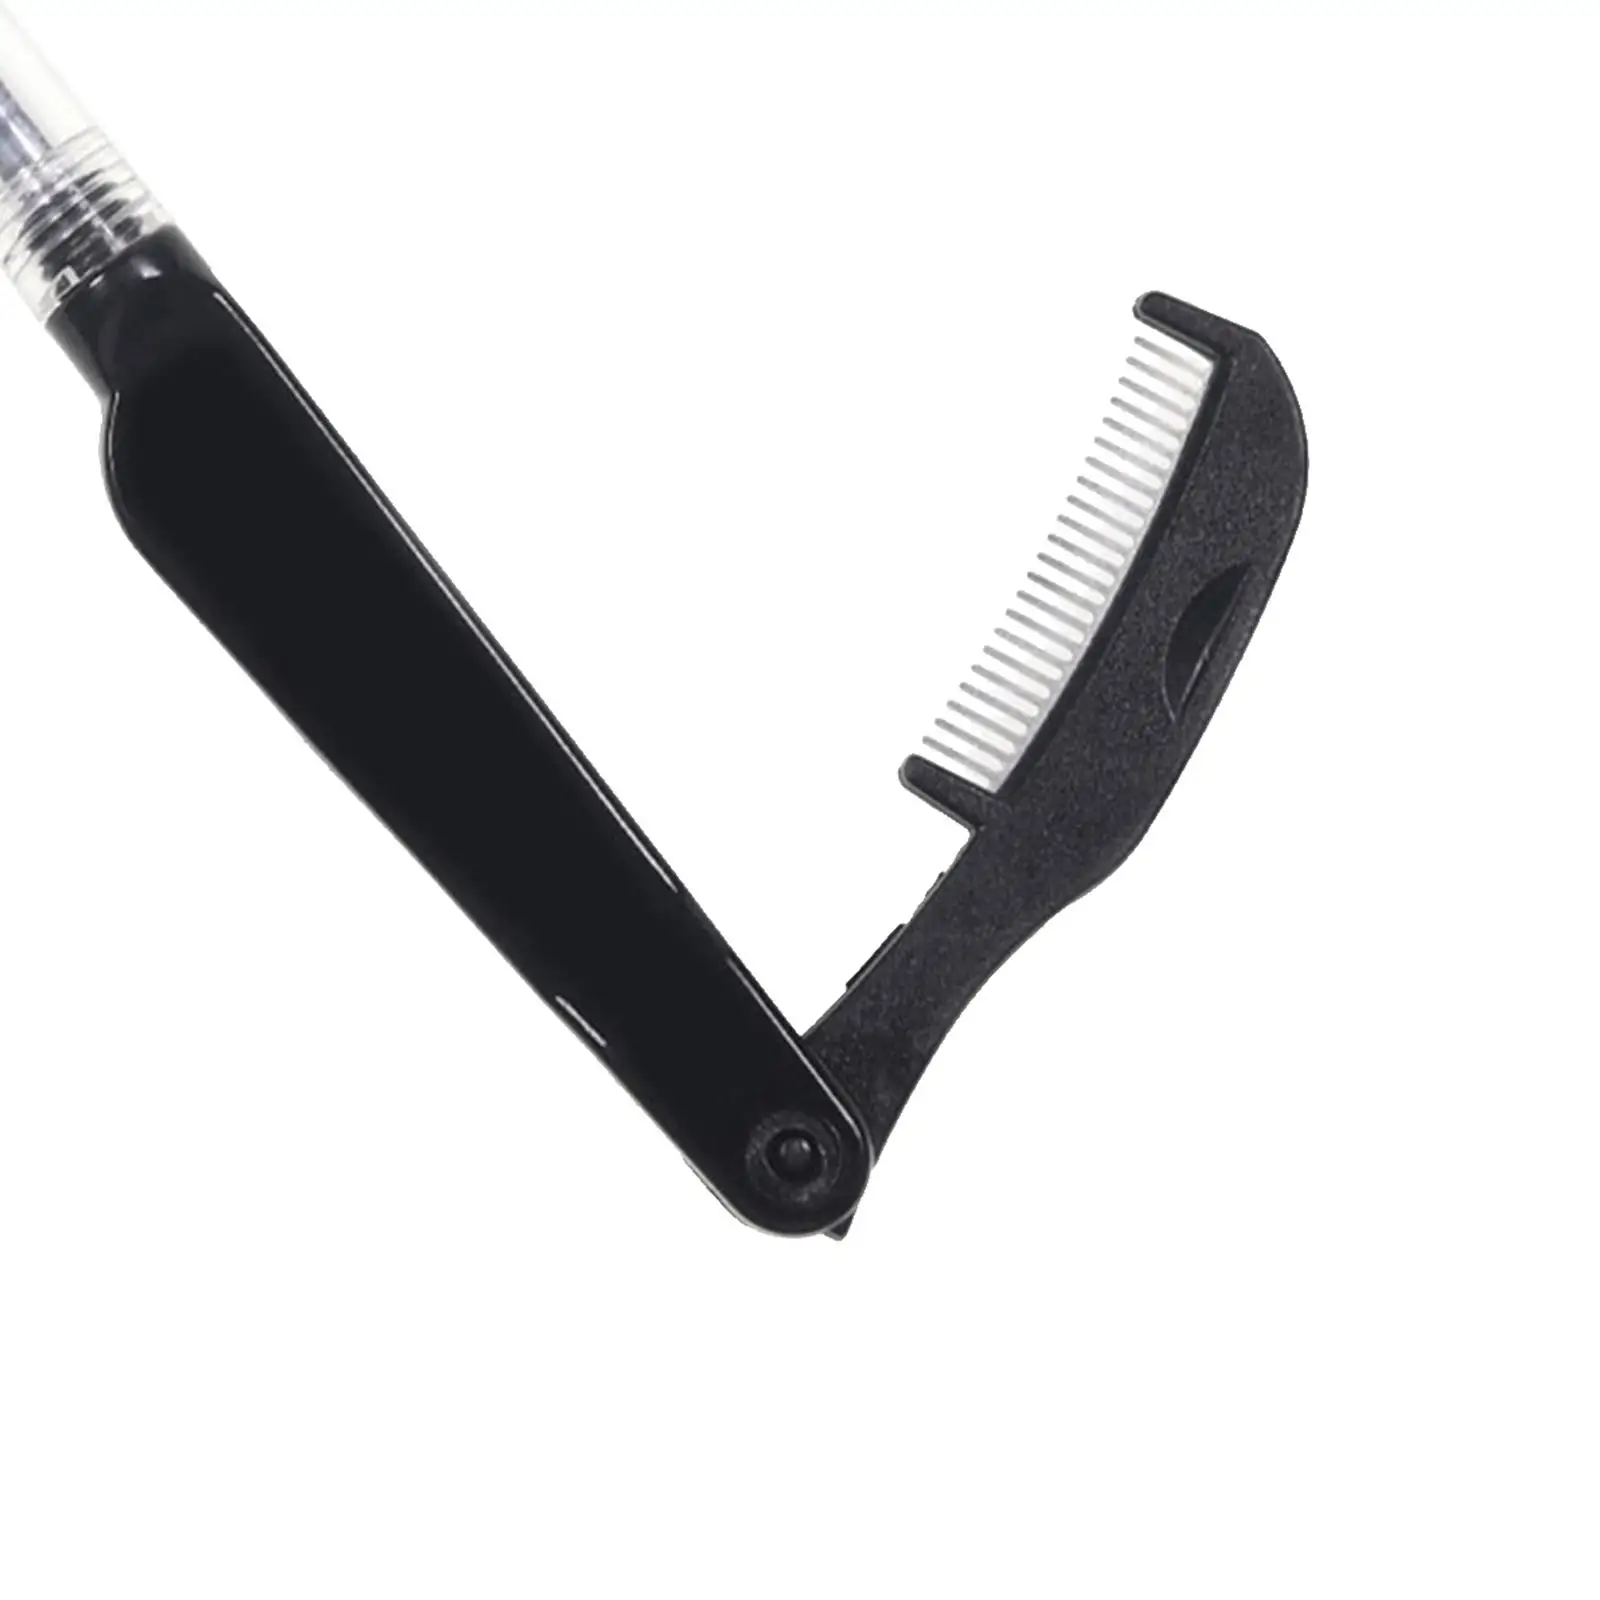 Plastic Fly Tying Tools Dubbing Brush Foldable Comb Hair Comb Forcep Tools DIY